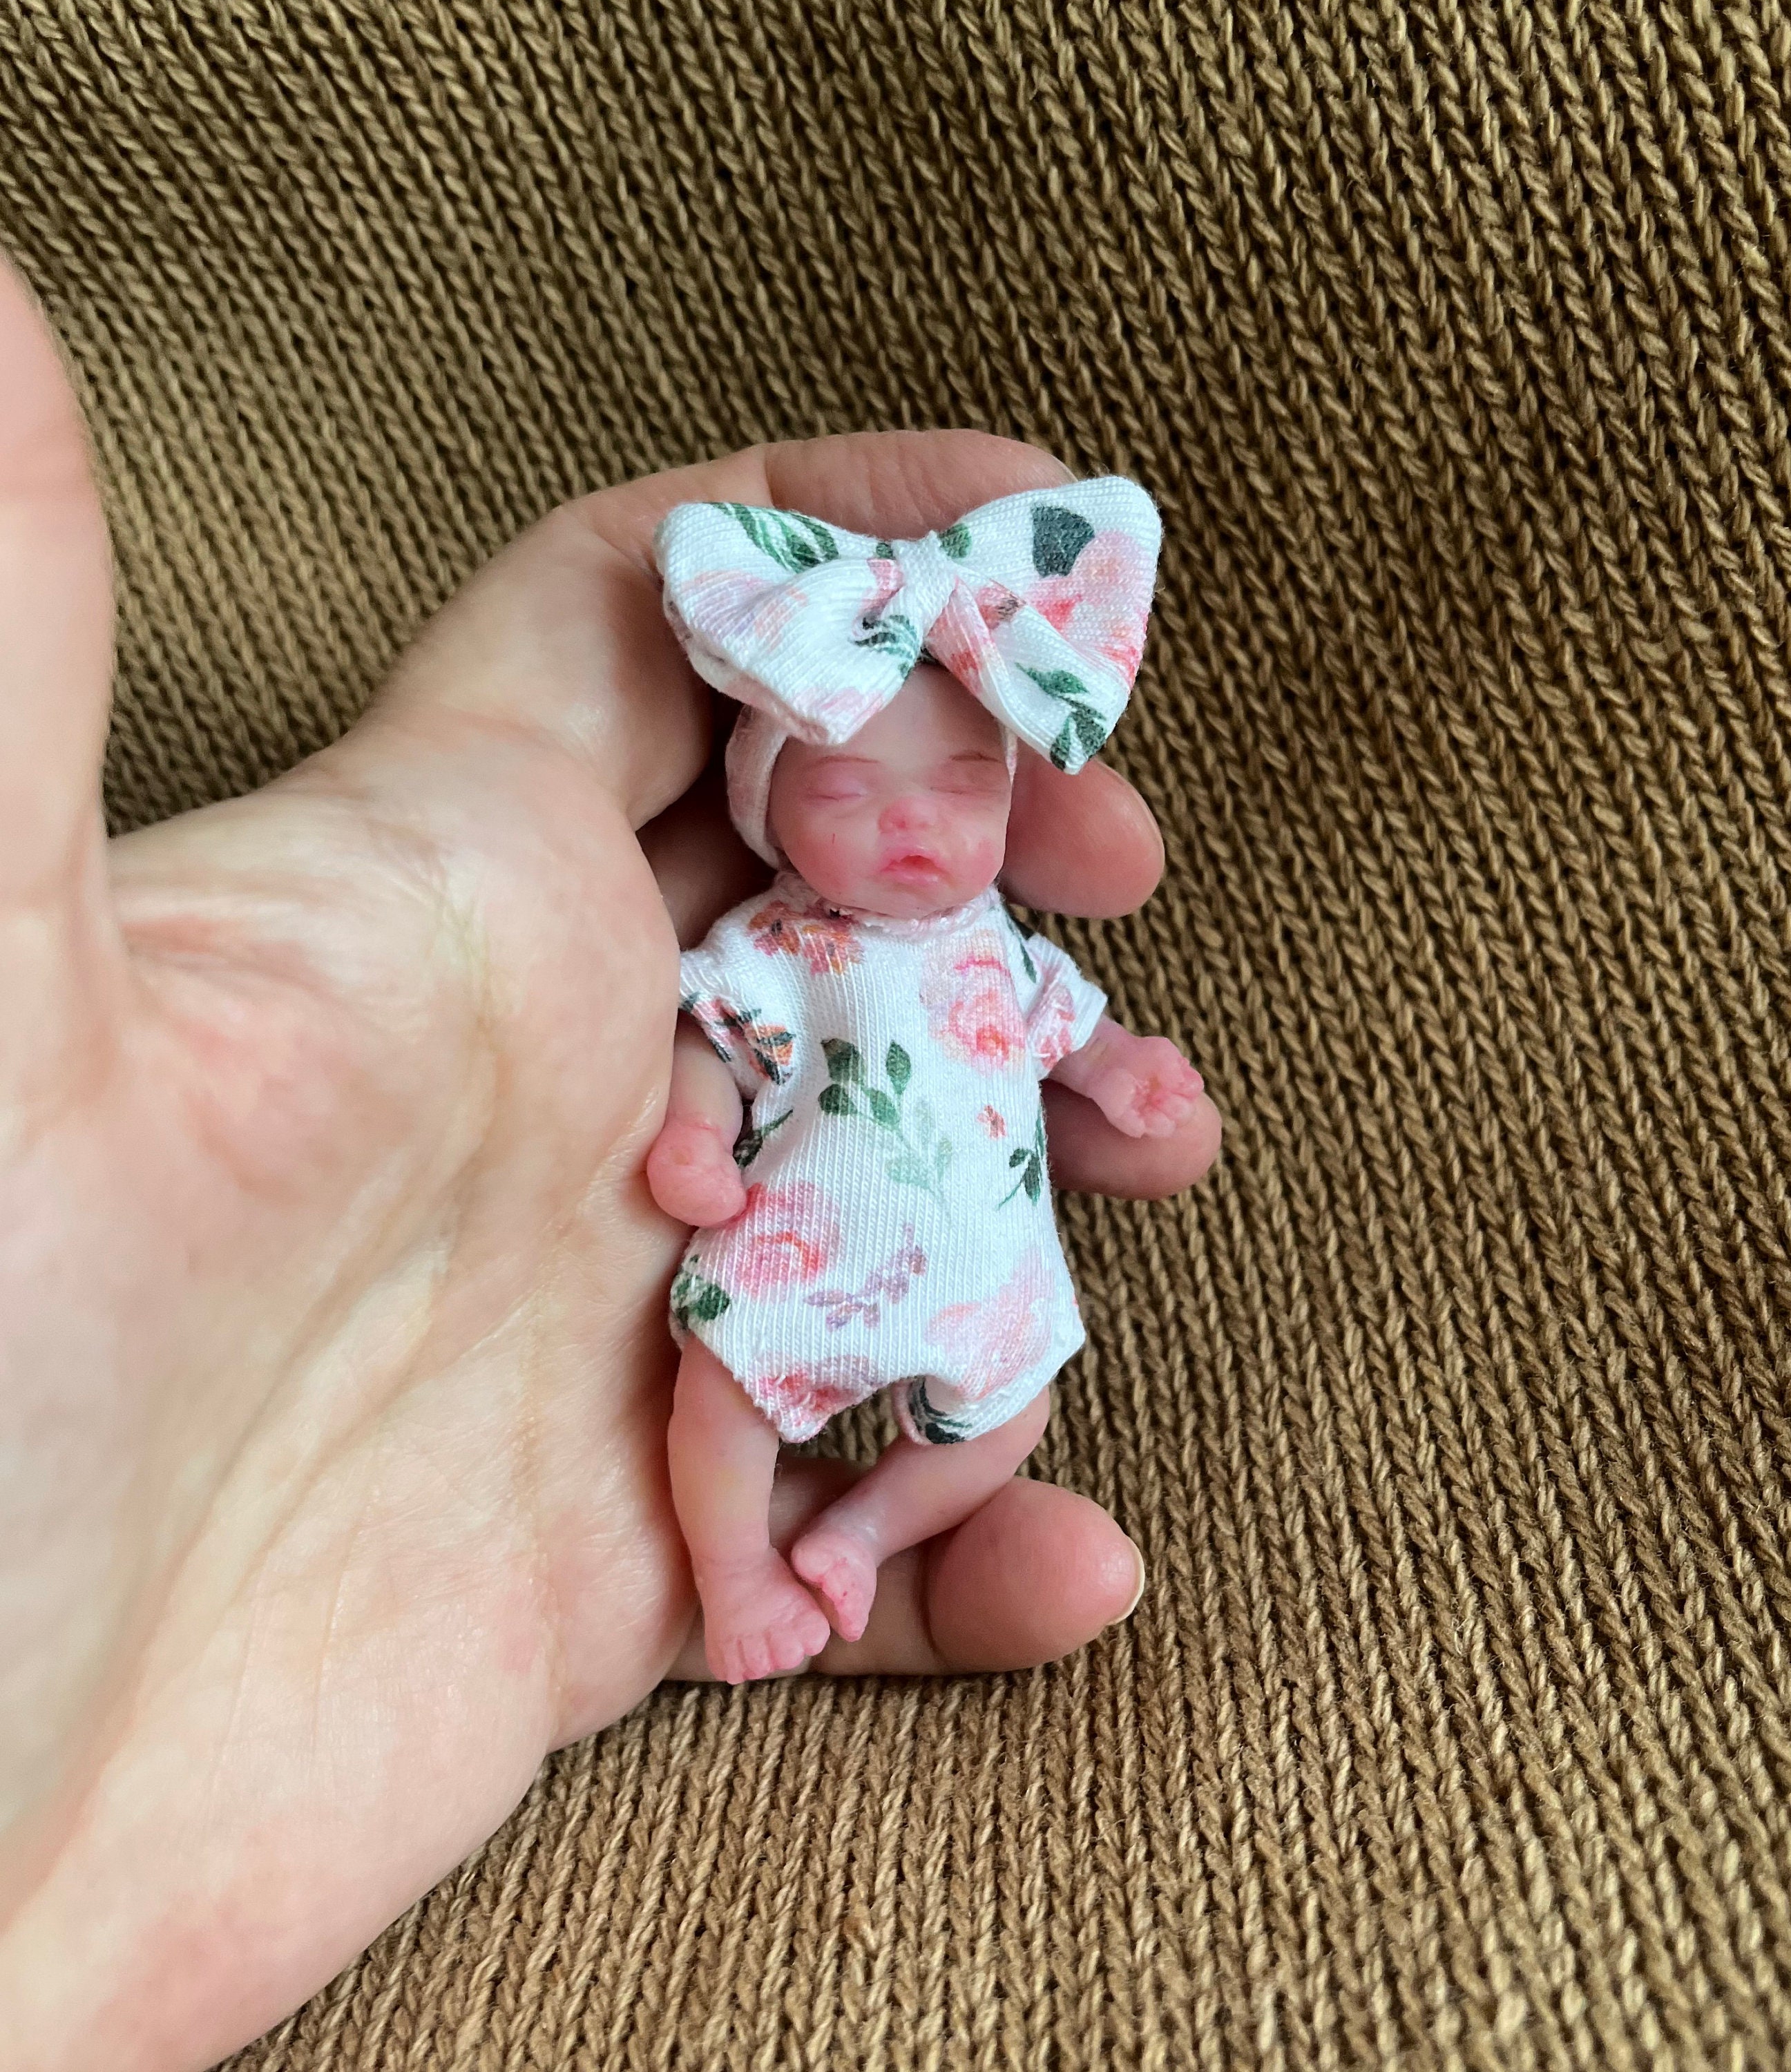 Fridja 28CM Lifelike Baby Dolls Baby Toys For Children 11 Inch Full  Silicone Mini Doll